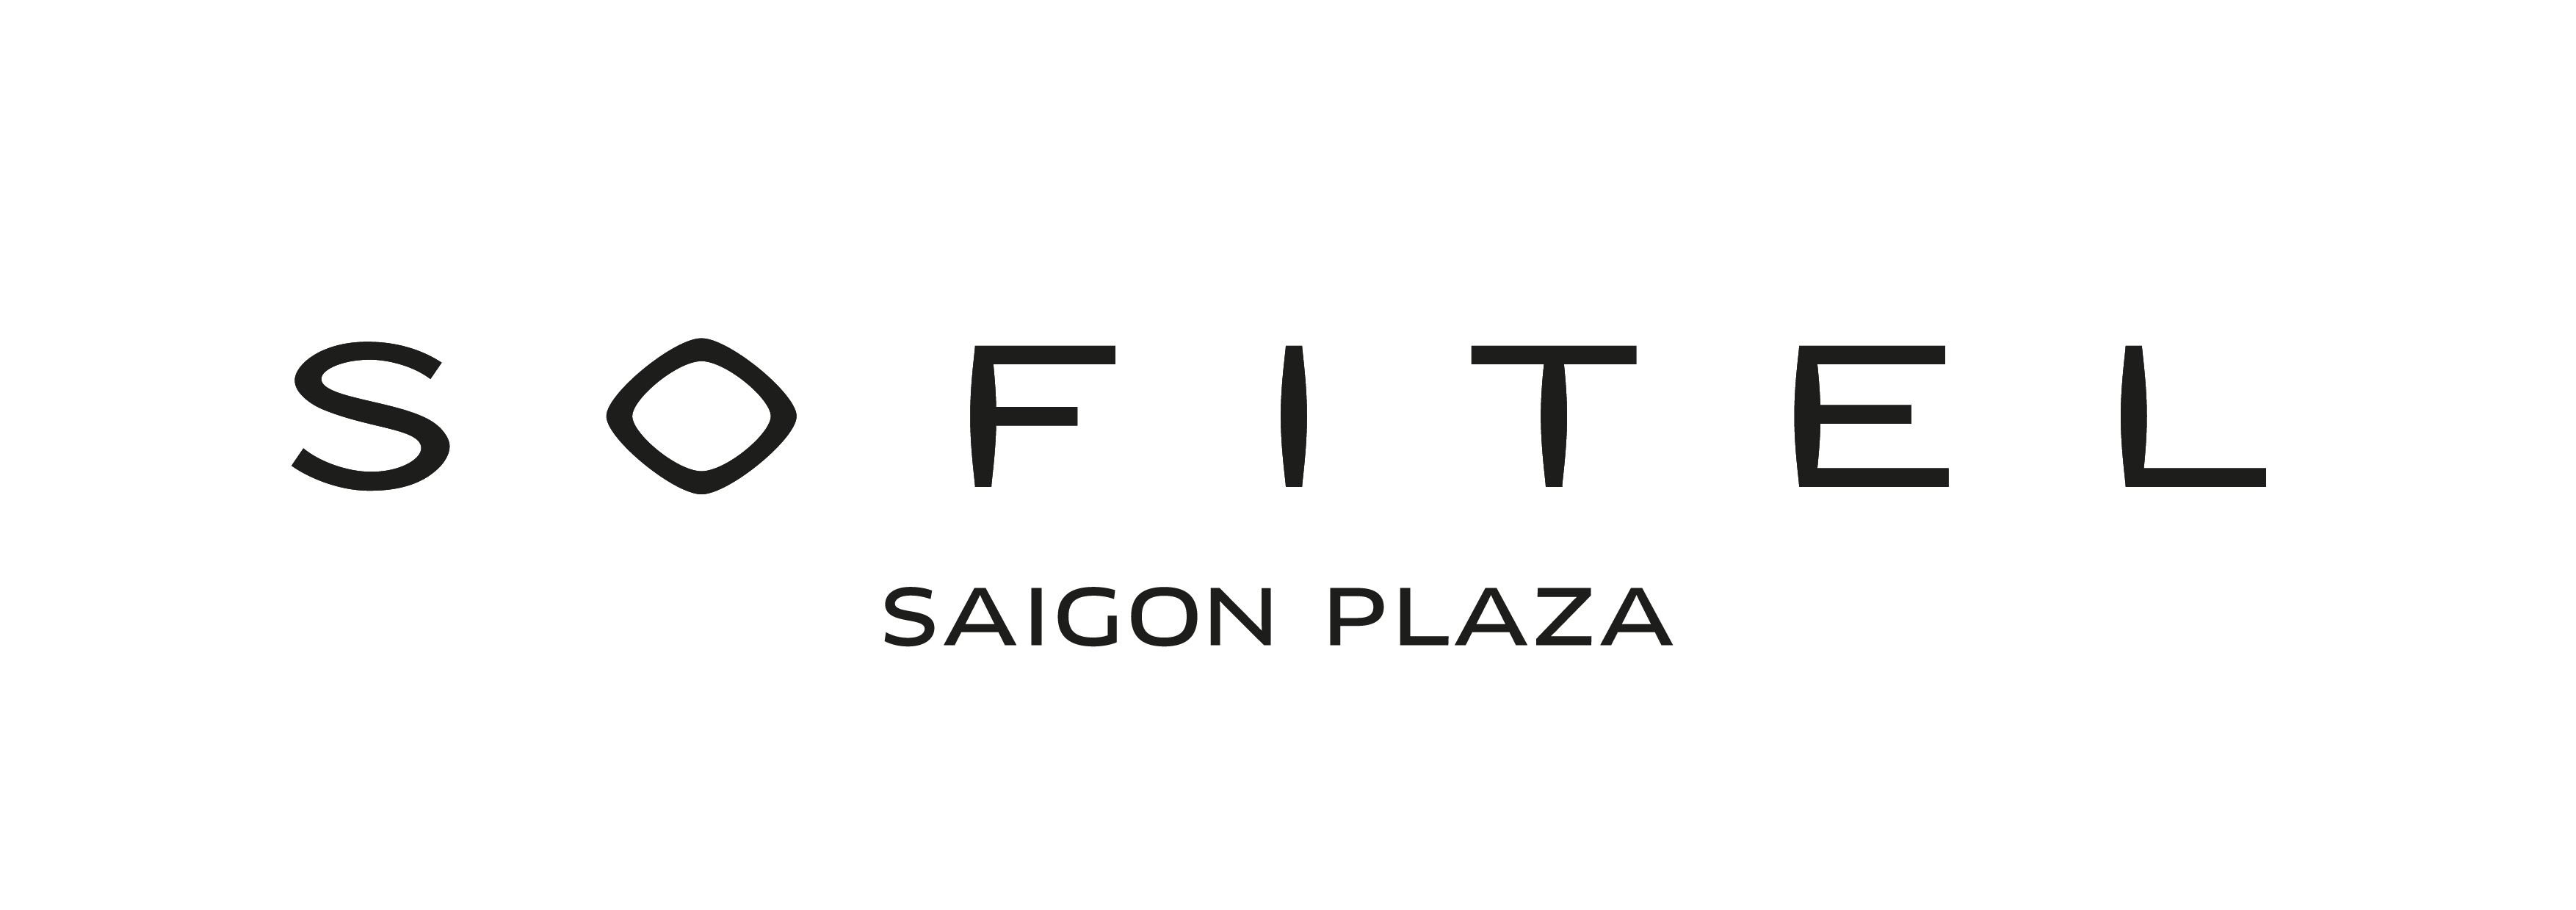 Sofitel Saigon Plaza